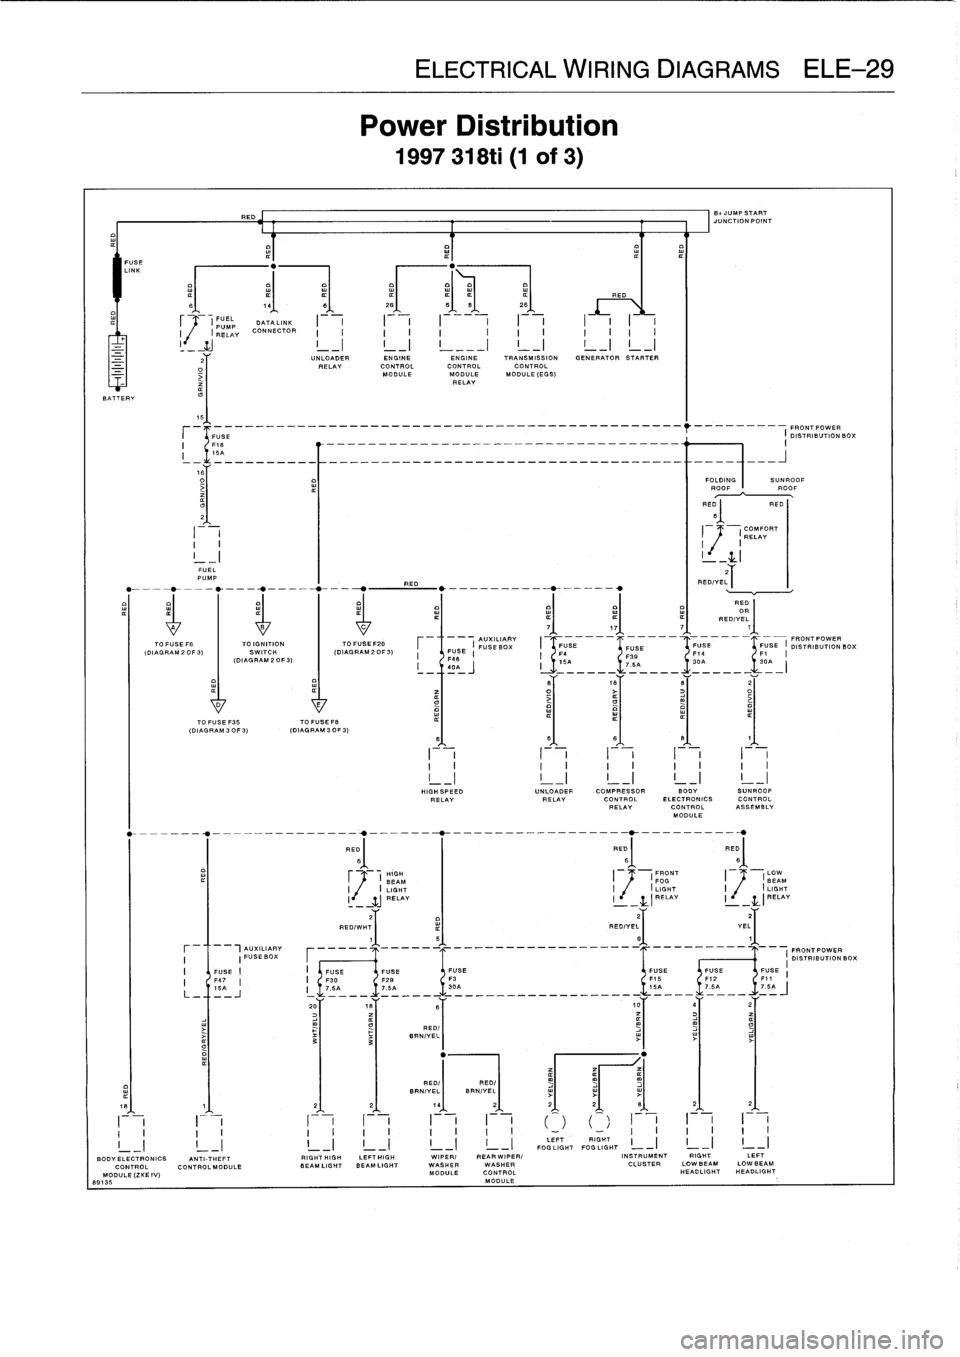 BMW M3 1993 E36 Service Manual 
FUSE
LINK

I
IRELAY
CONNECTOR
O
-
z
BATTERY

TO
FUSE
F6
(DIAGRAM
2
OF
3)

FUEL
PUMP

I
-
1
I
--
,I

	

I

	

I

	

I
_I
LI
BODY
ELECTRONICS

	

ANTI-THEFT
CONTROL
CONTROLMODULEMODULE
(ZKE
IV)
80135

